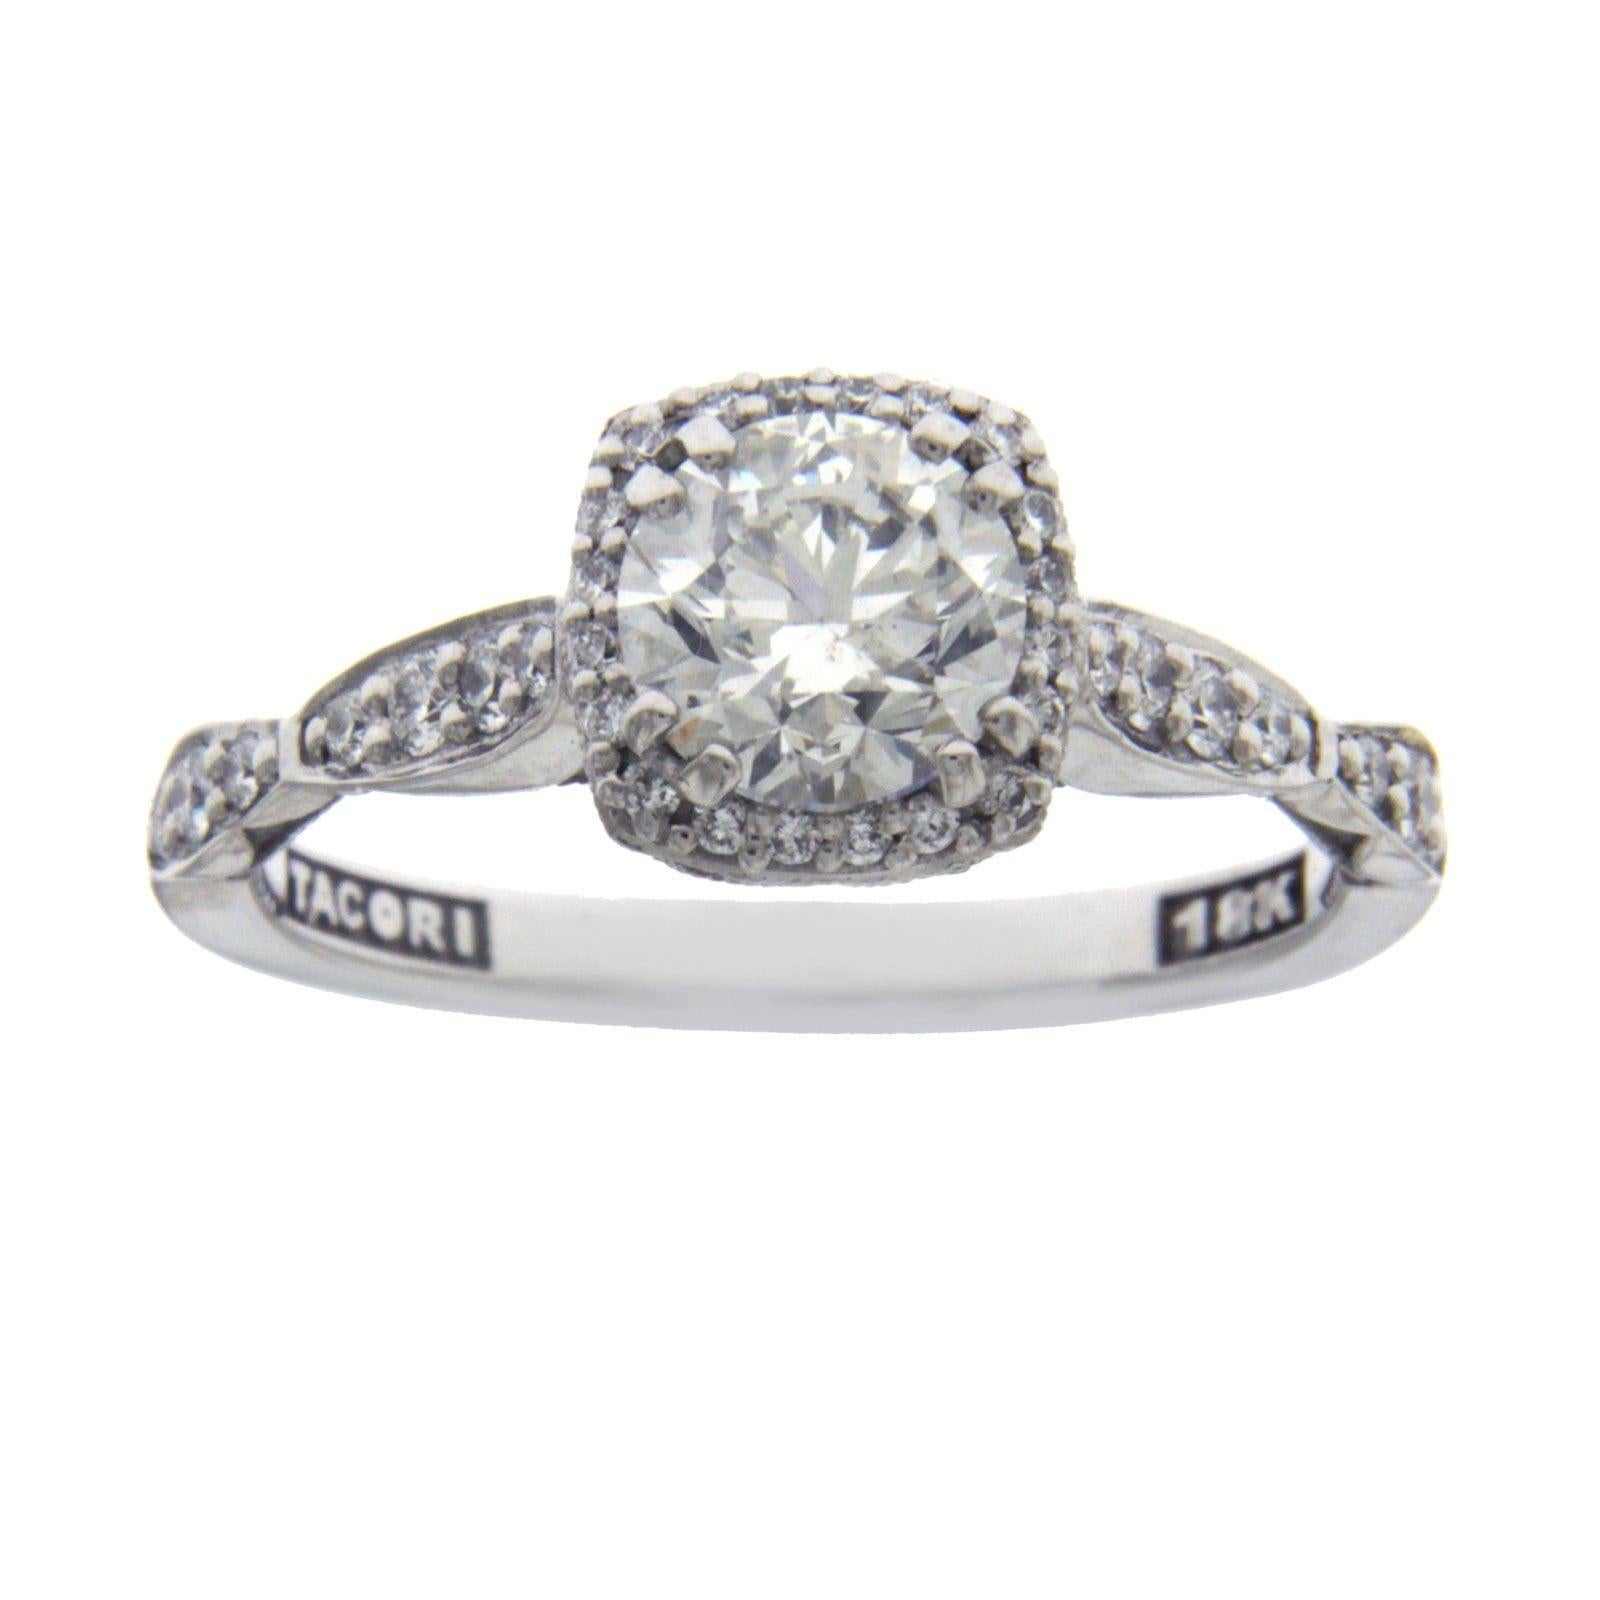 Tacori 18 Karat Gold 1.01 Carat I1 G Diamond Robbins Brothers Engagement Ring